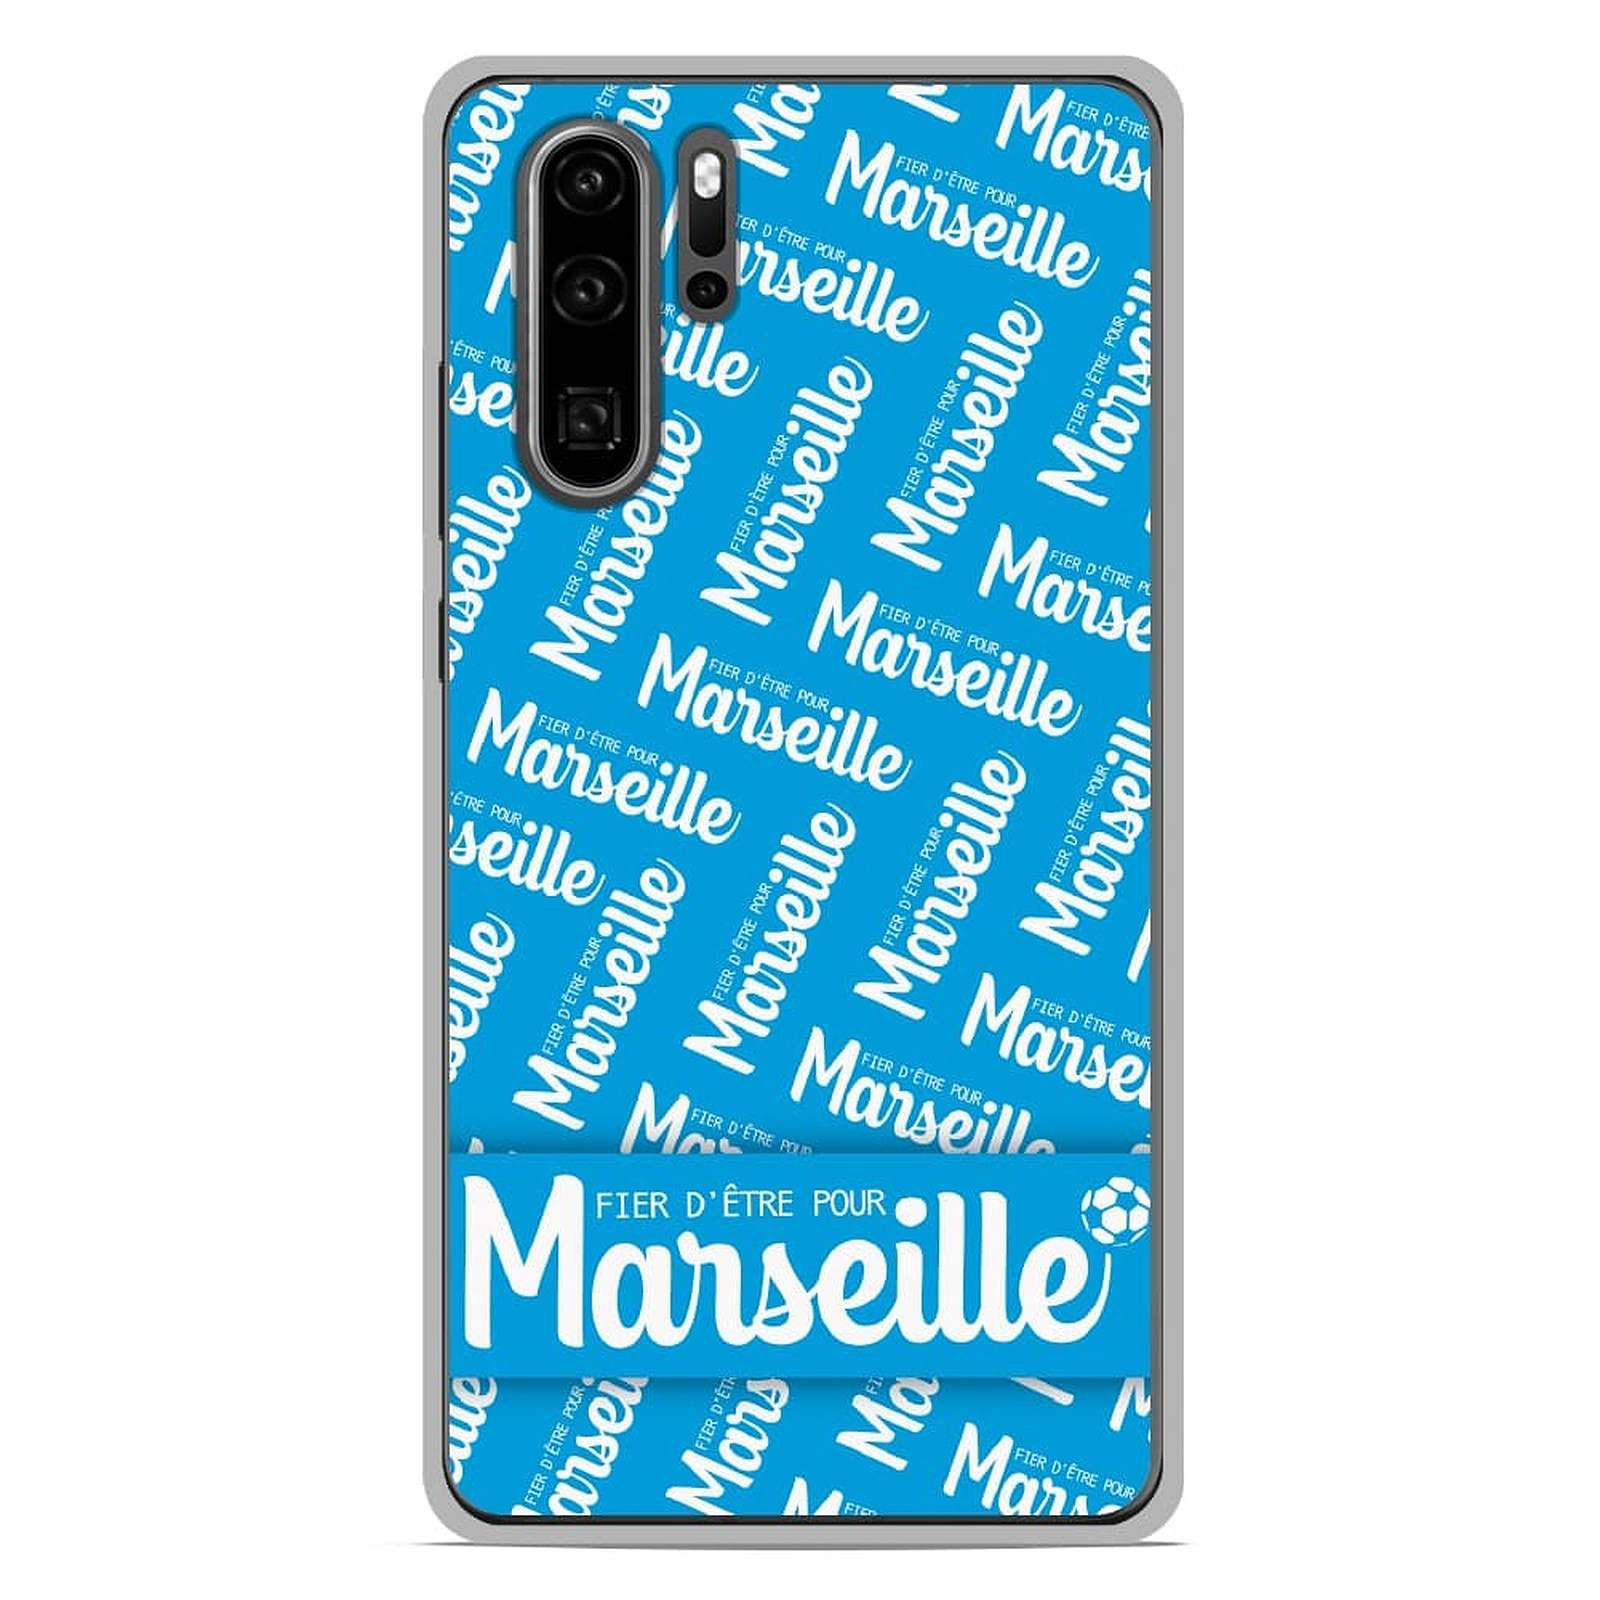 1001 Coques Coque silicone gel Huawei P30 Pro motif Fier d'etre pour Marseille - Coque telephone 1001Coques